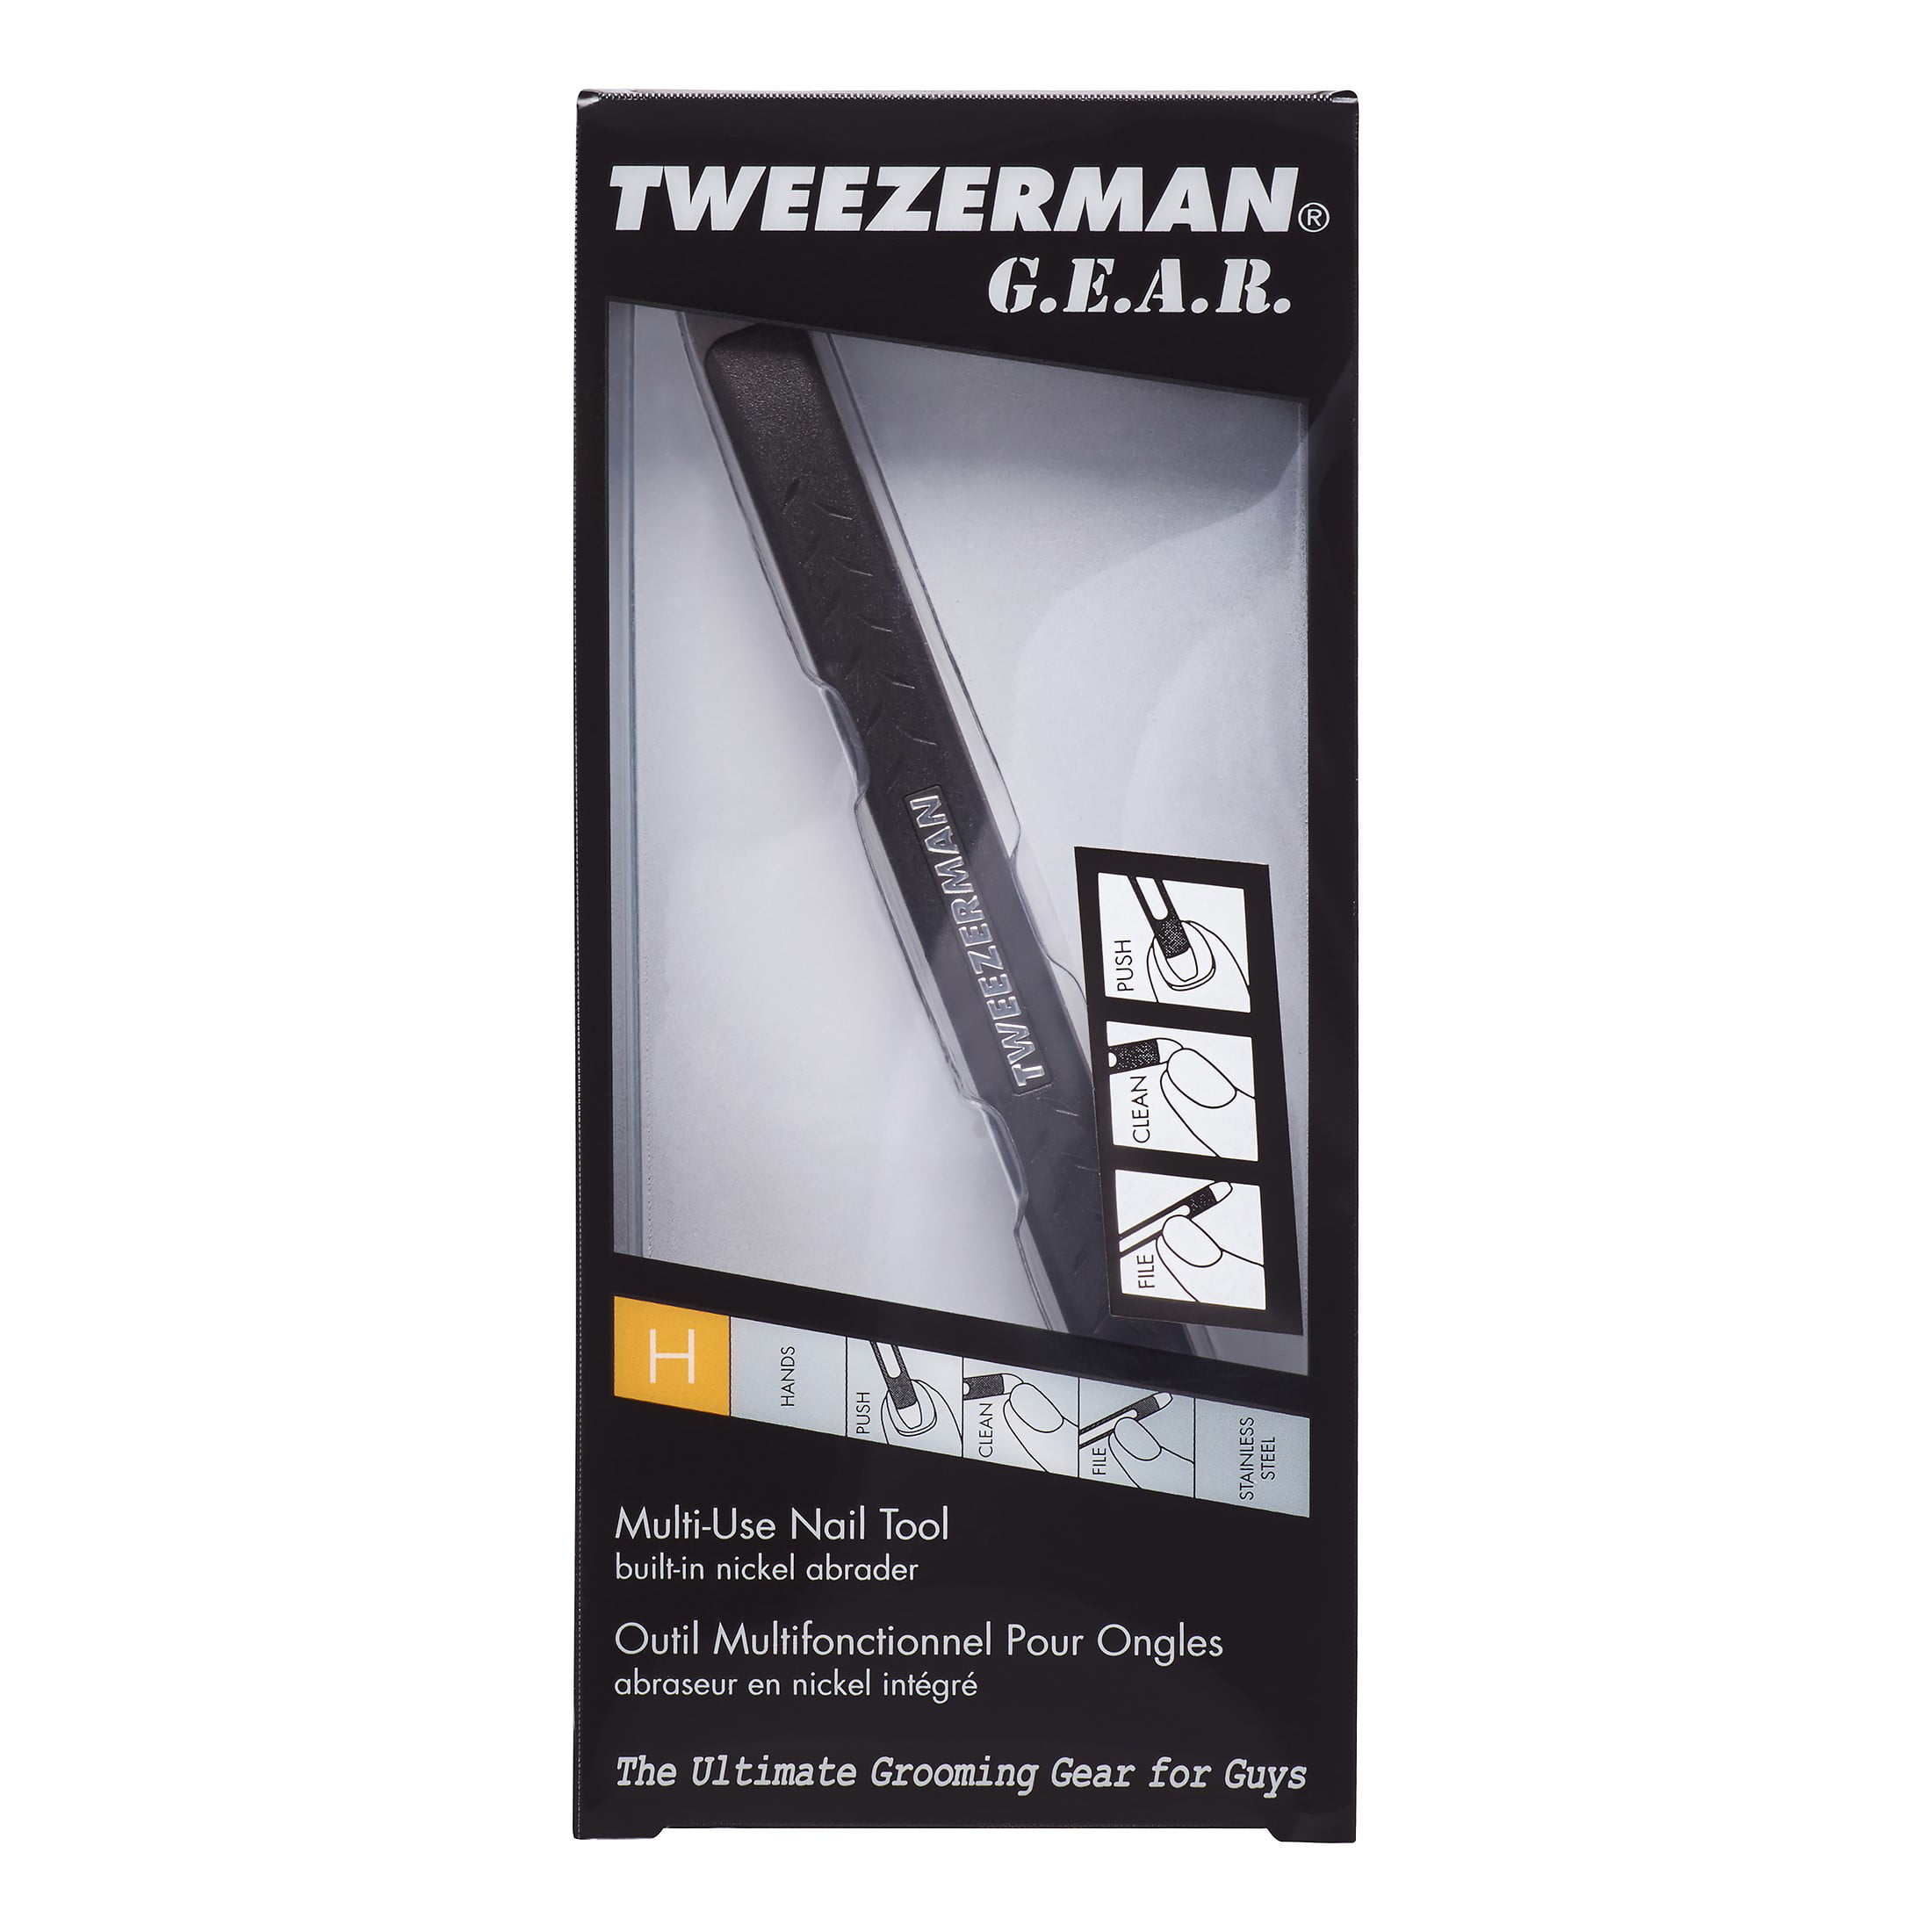 Tweezerman Multi-Use Nail Tool